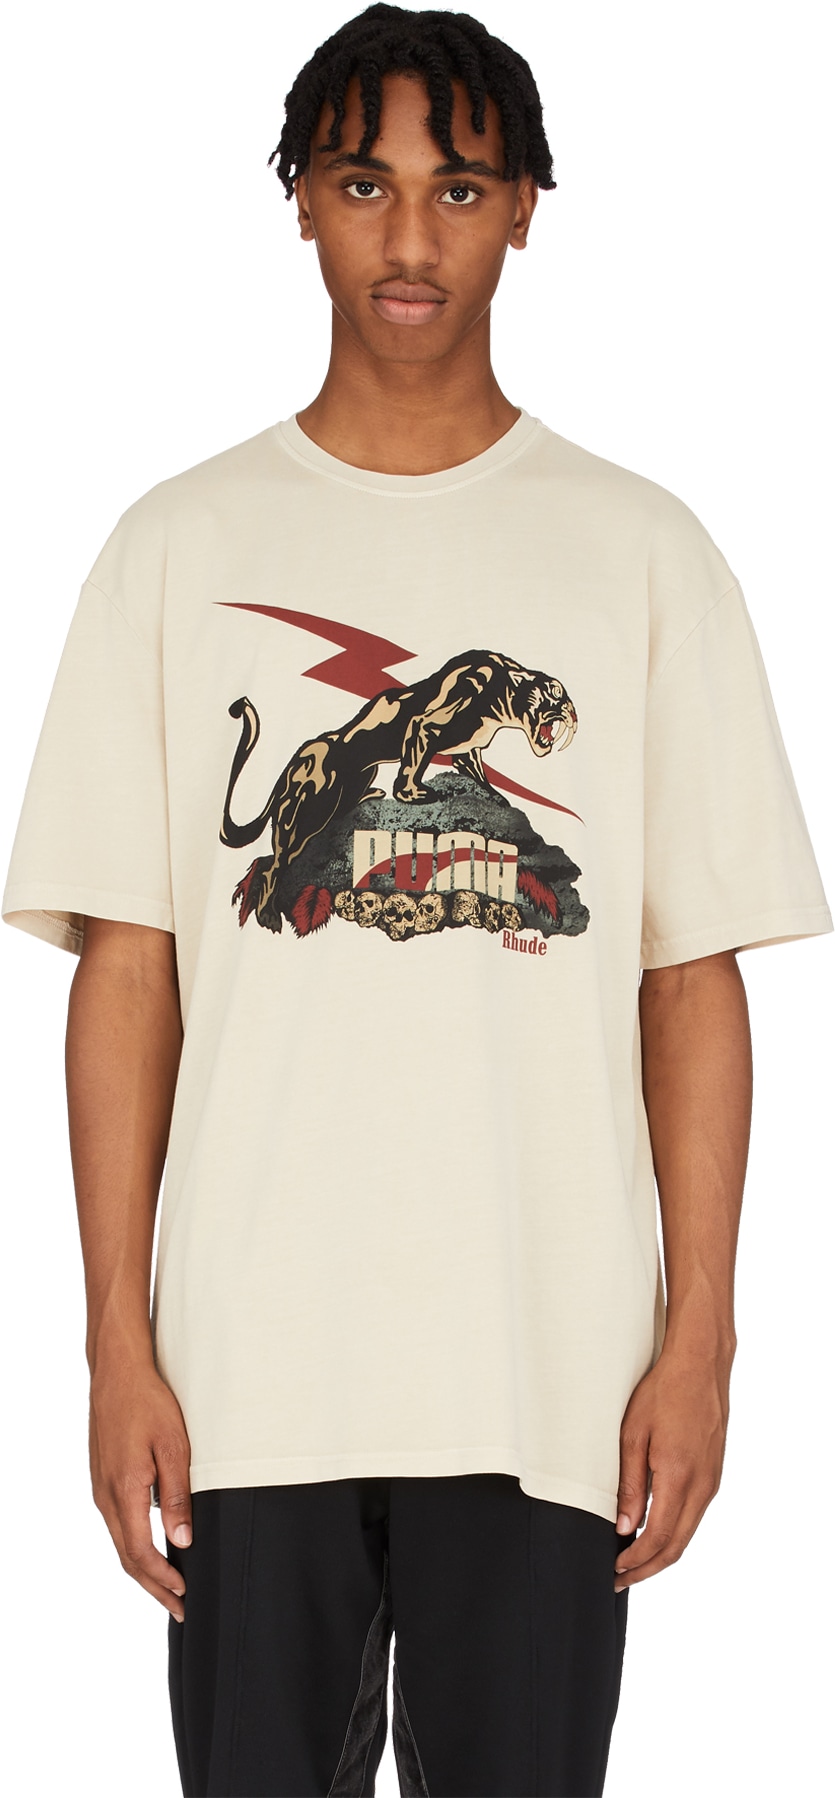 Puma: Rhude T-Shirt - Overcast | influenceu